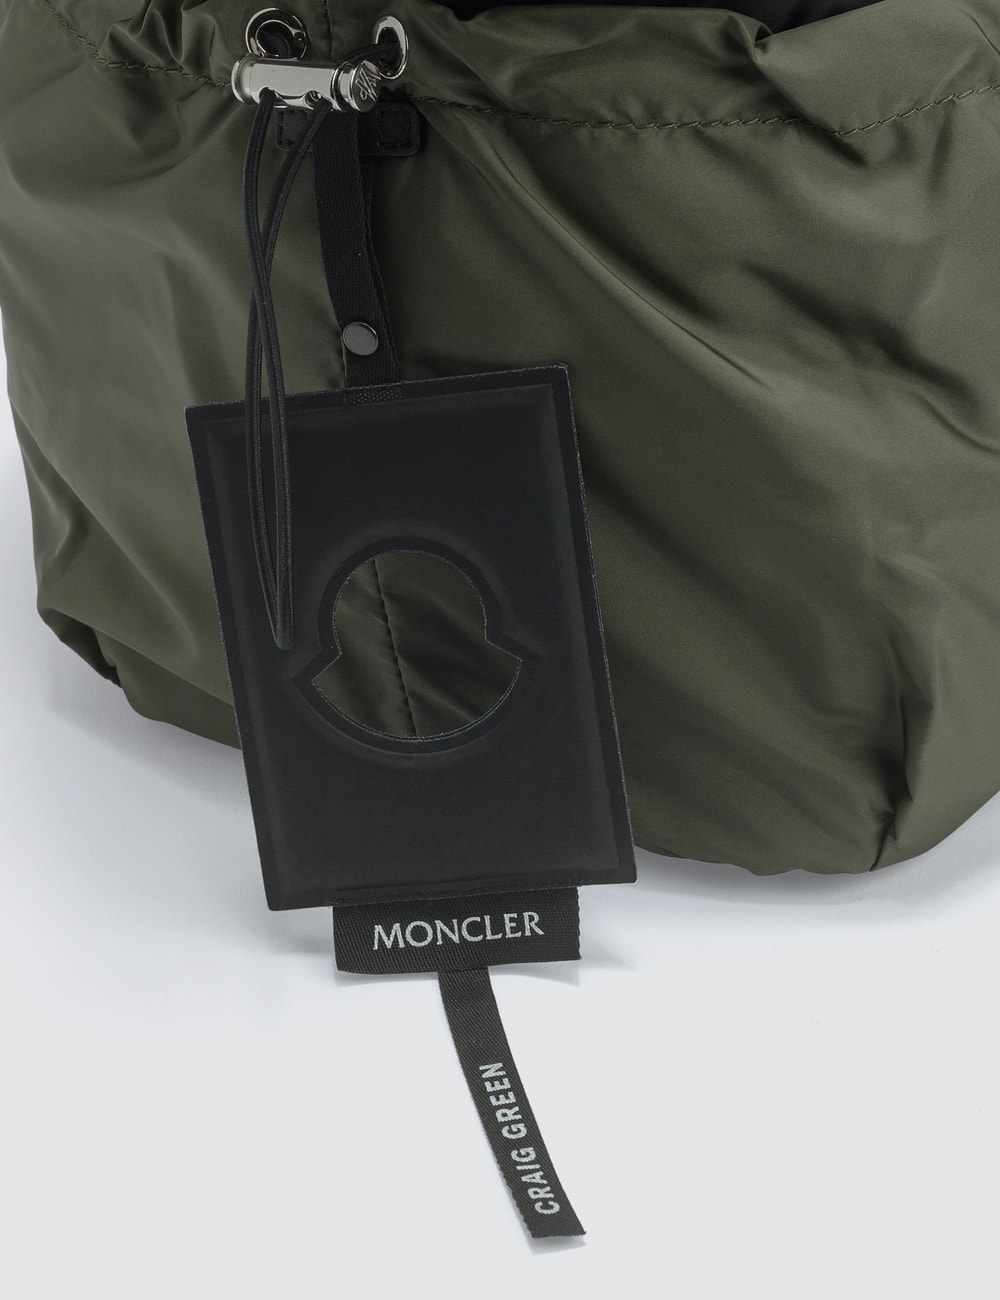 Moncler Genius - Moncler Genius x Craig Green Tote Bag | HBX